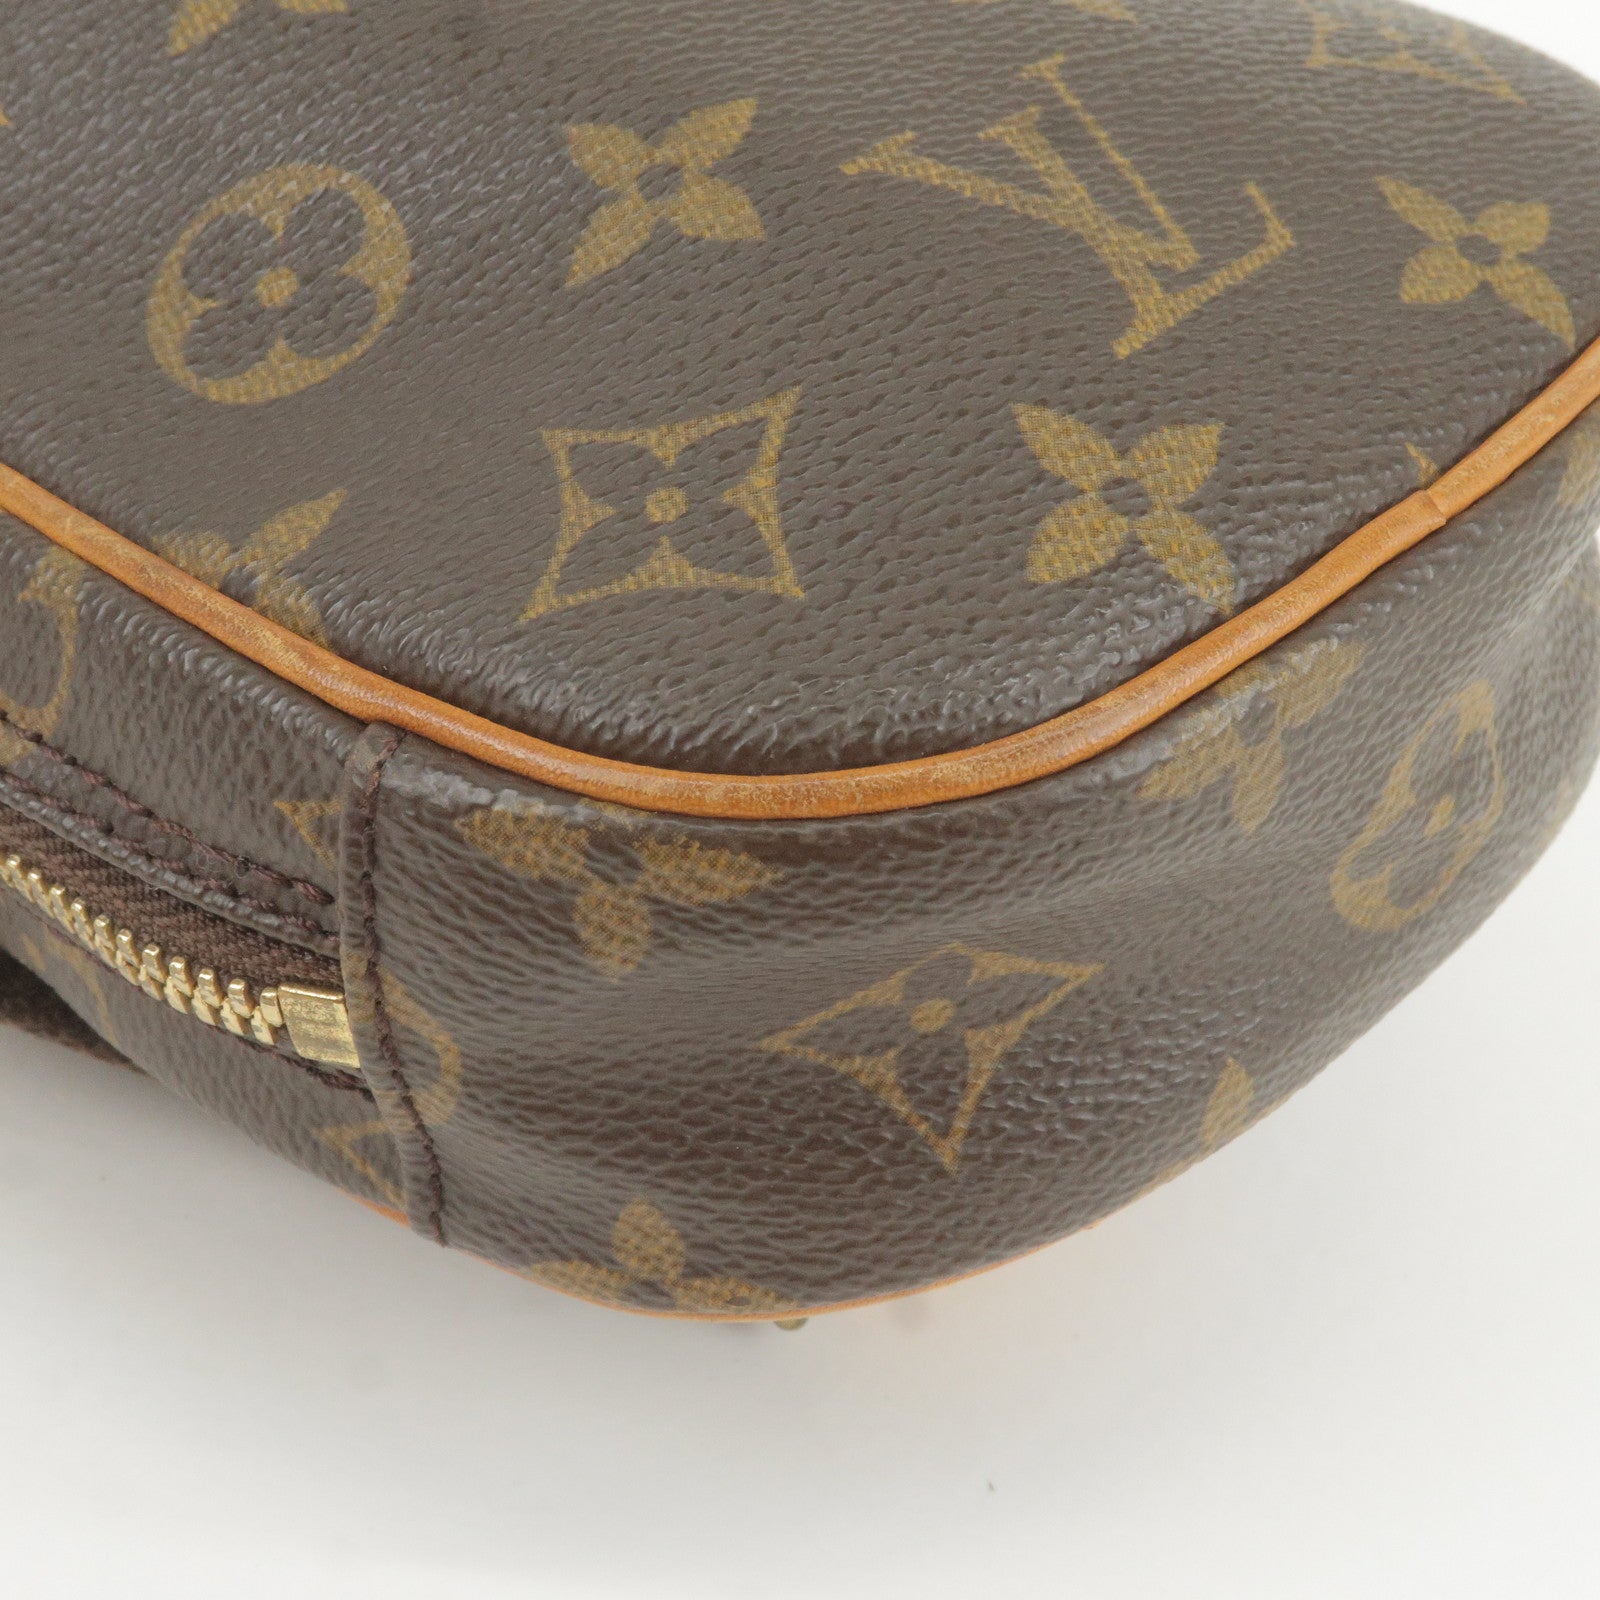 Pre-owned Louis Vuitton 2004 Pochette Florentine Belt Bag In Brown